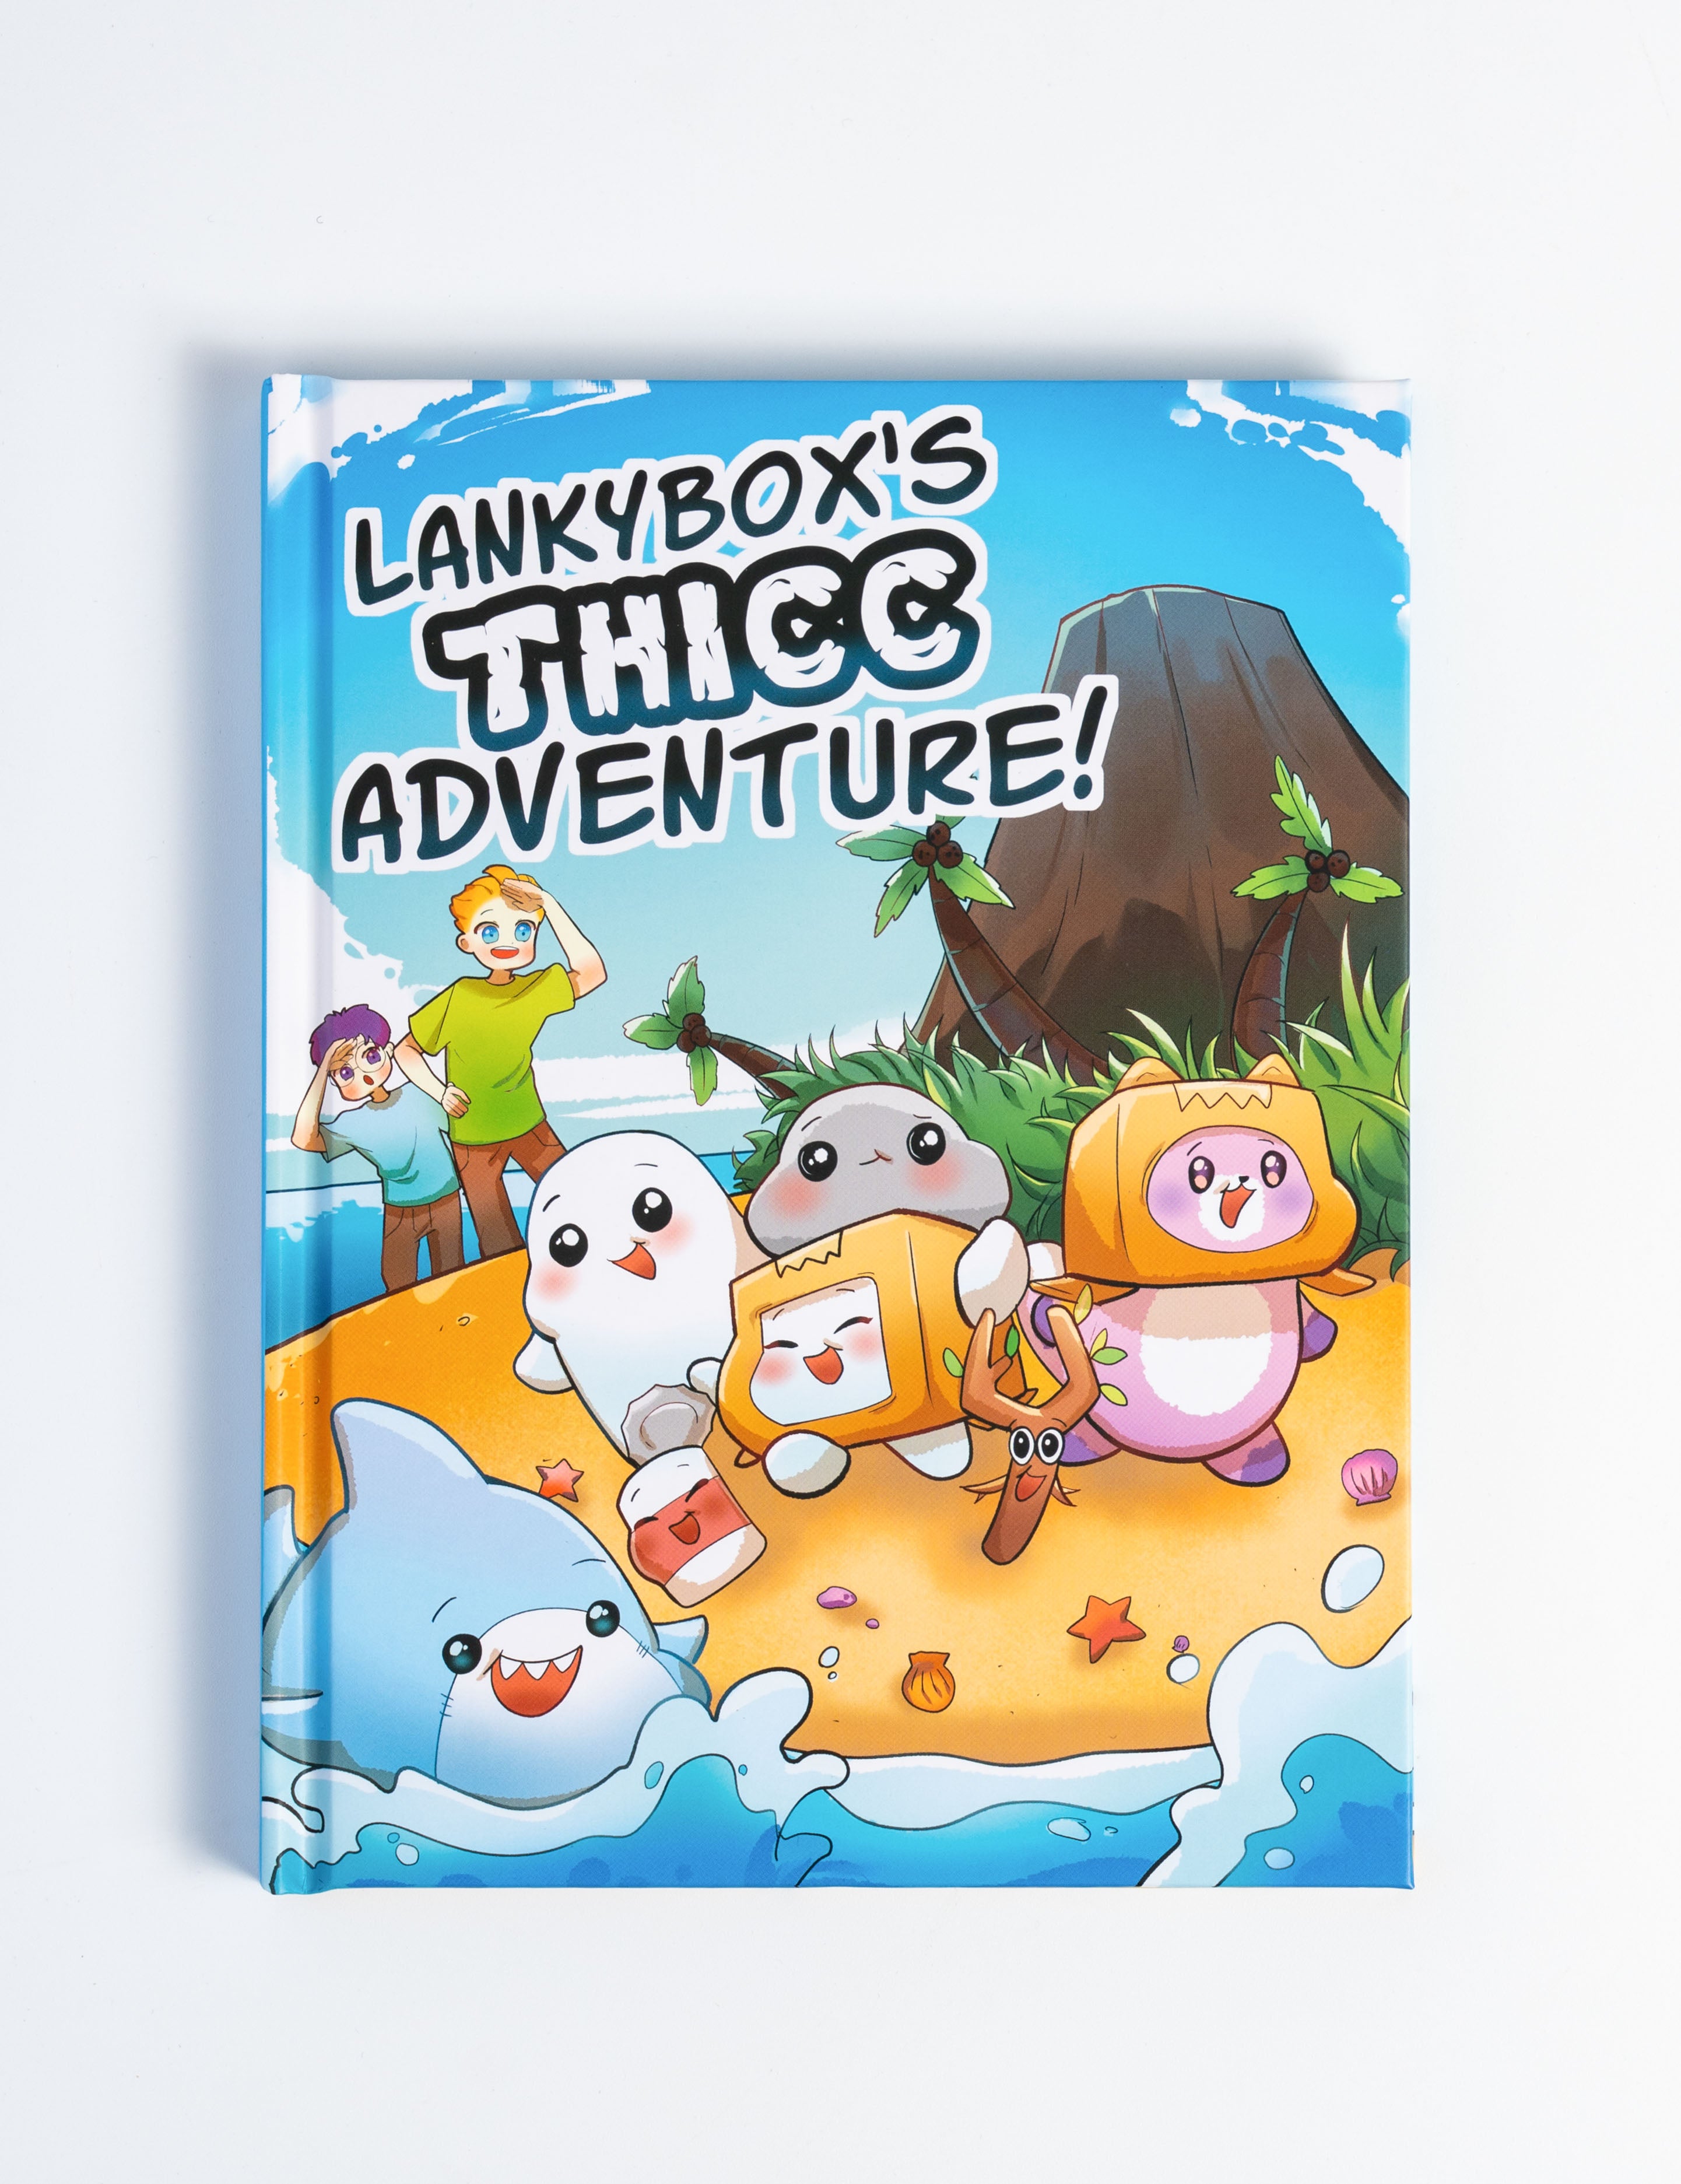 LankyBox's Thicc Adventure Book